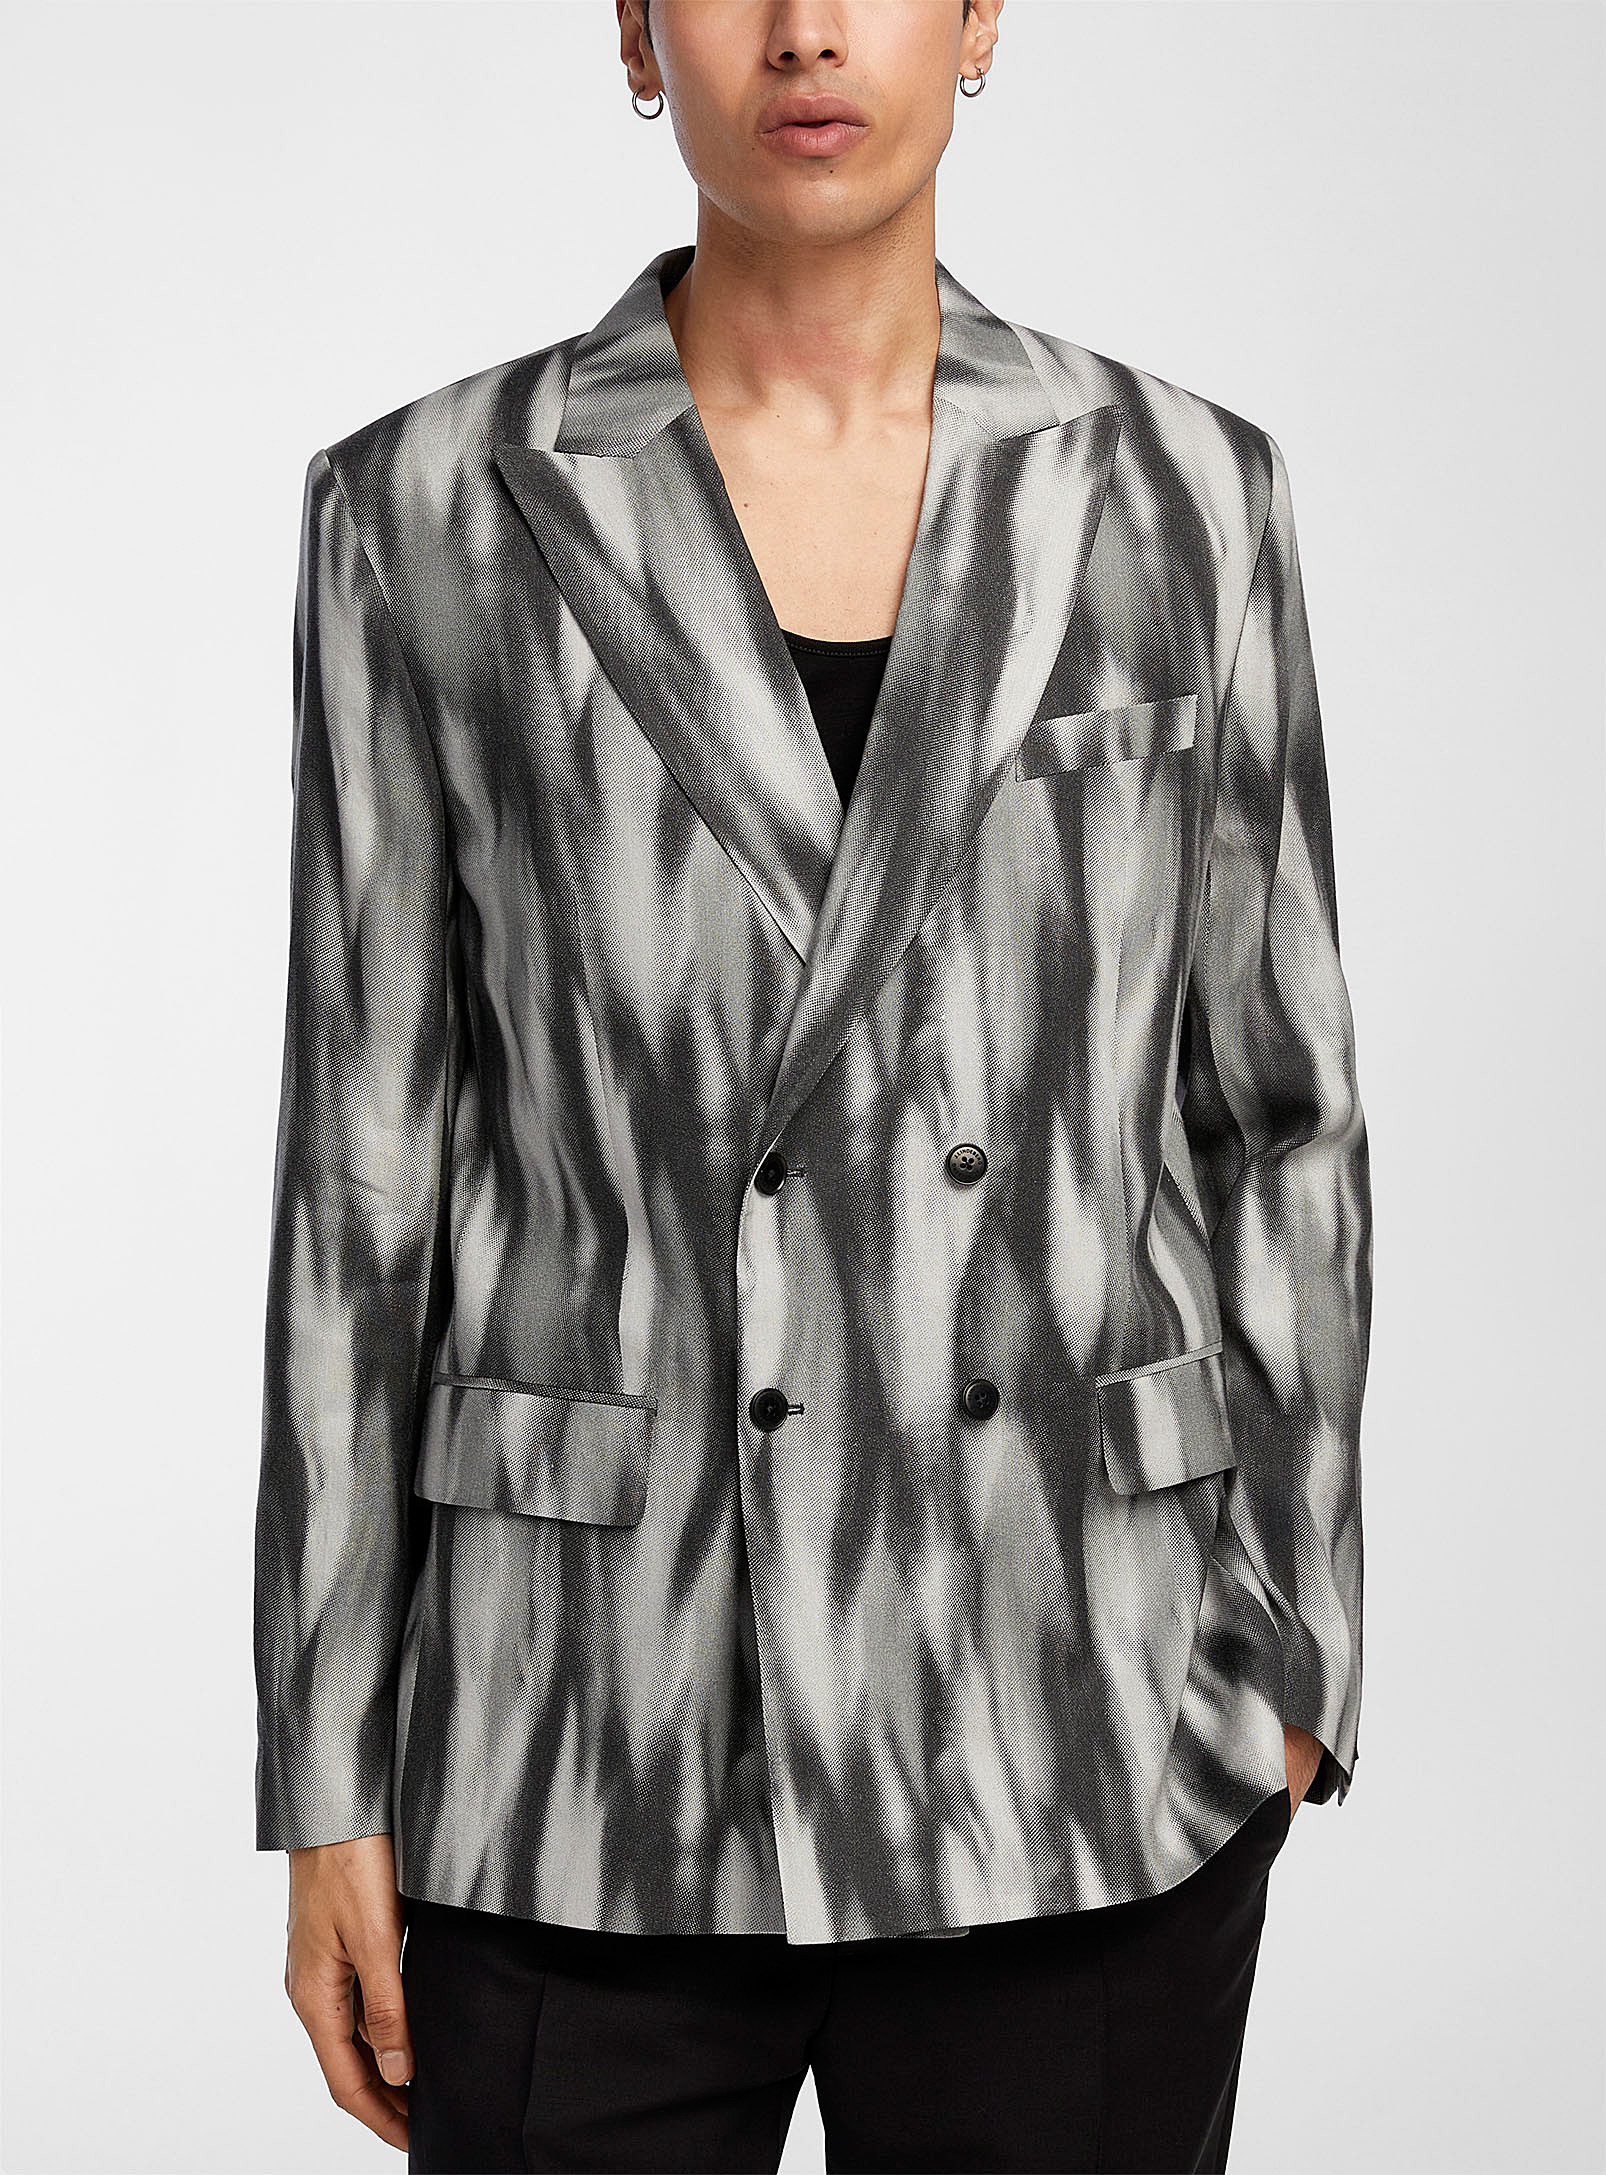 J.Lindeberg - Men's Dorian blurred pattern double-breasted jacket